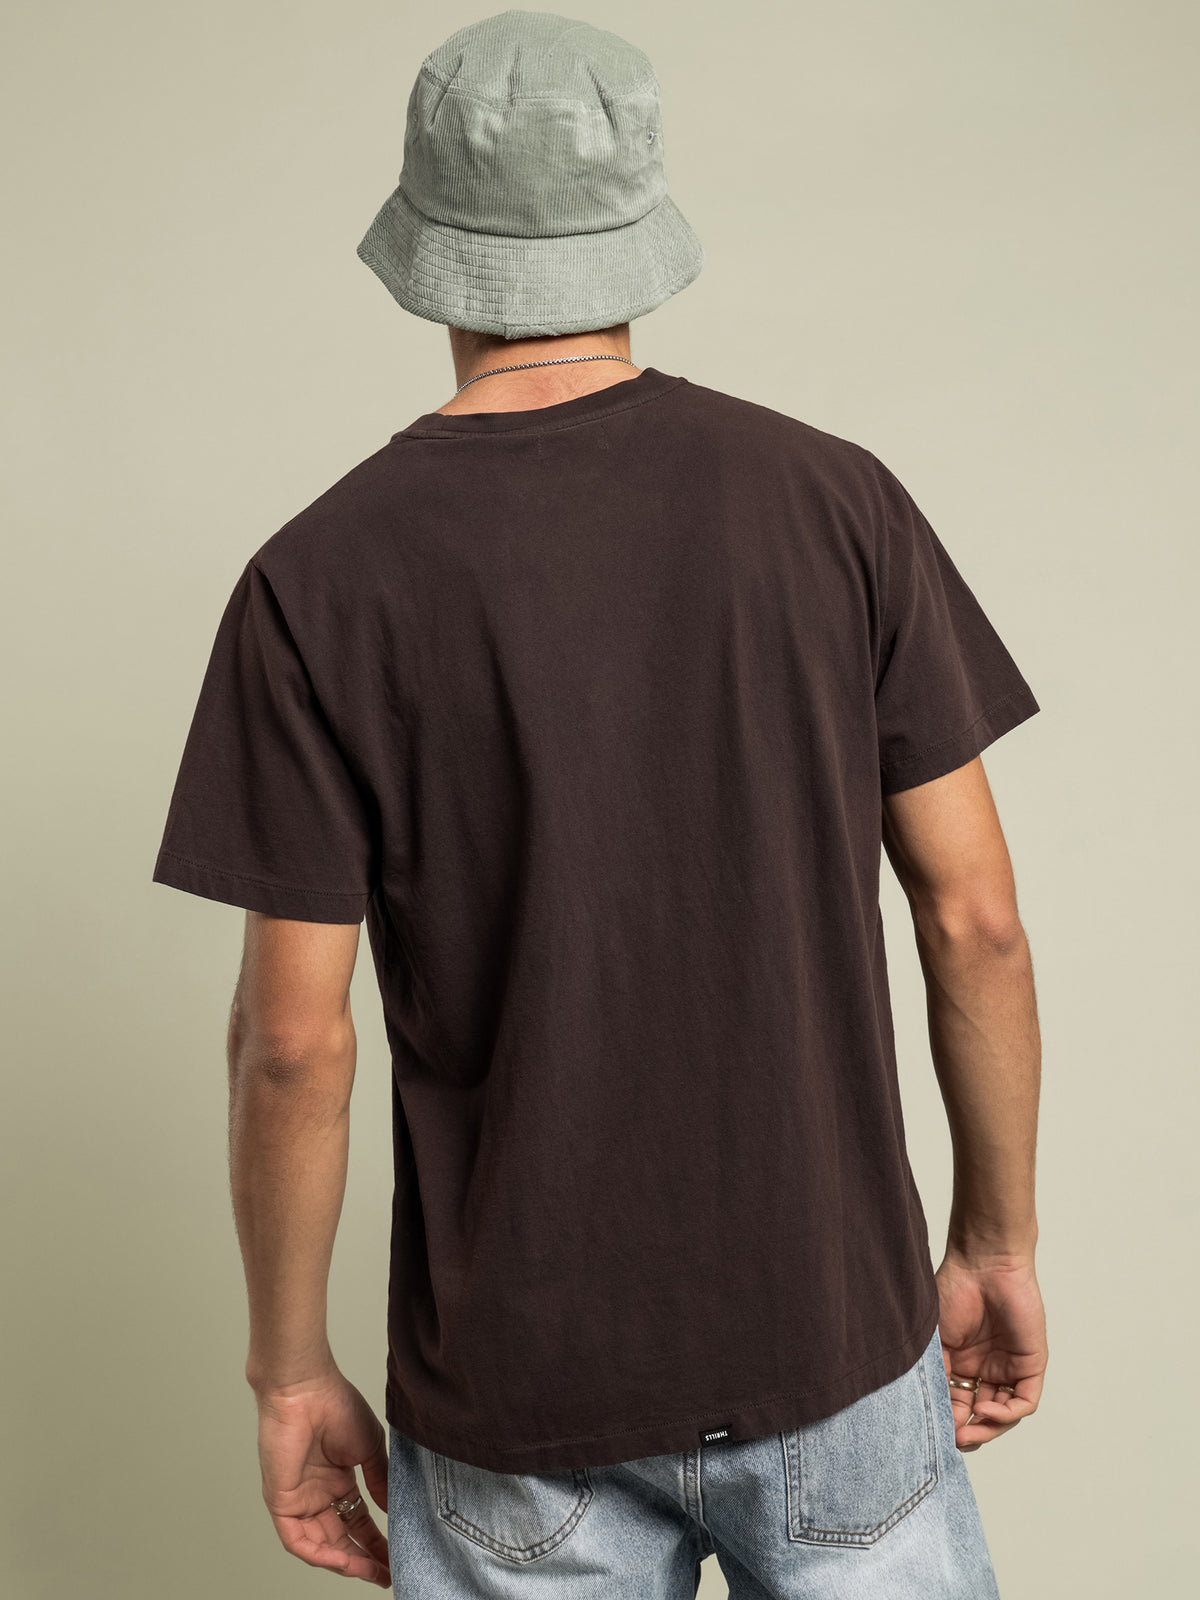 Eighty Three Merch Fit T-Shirt in Postal Brown